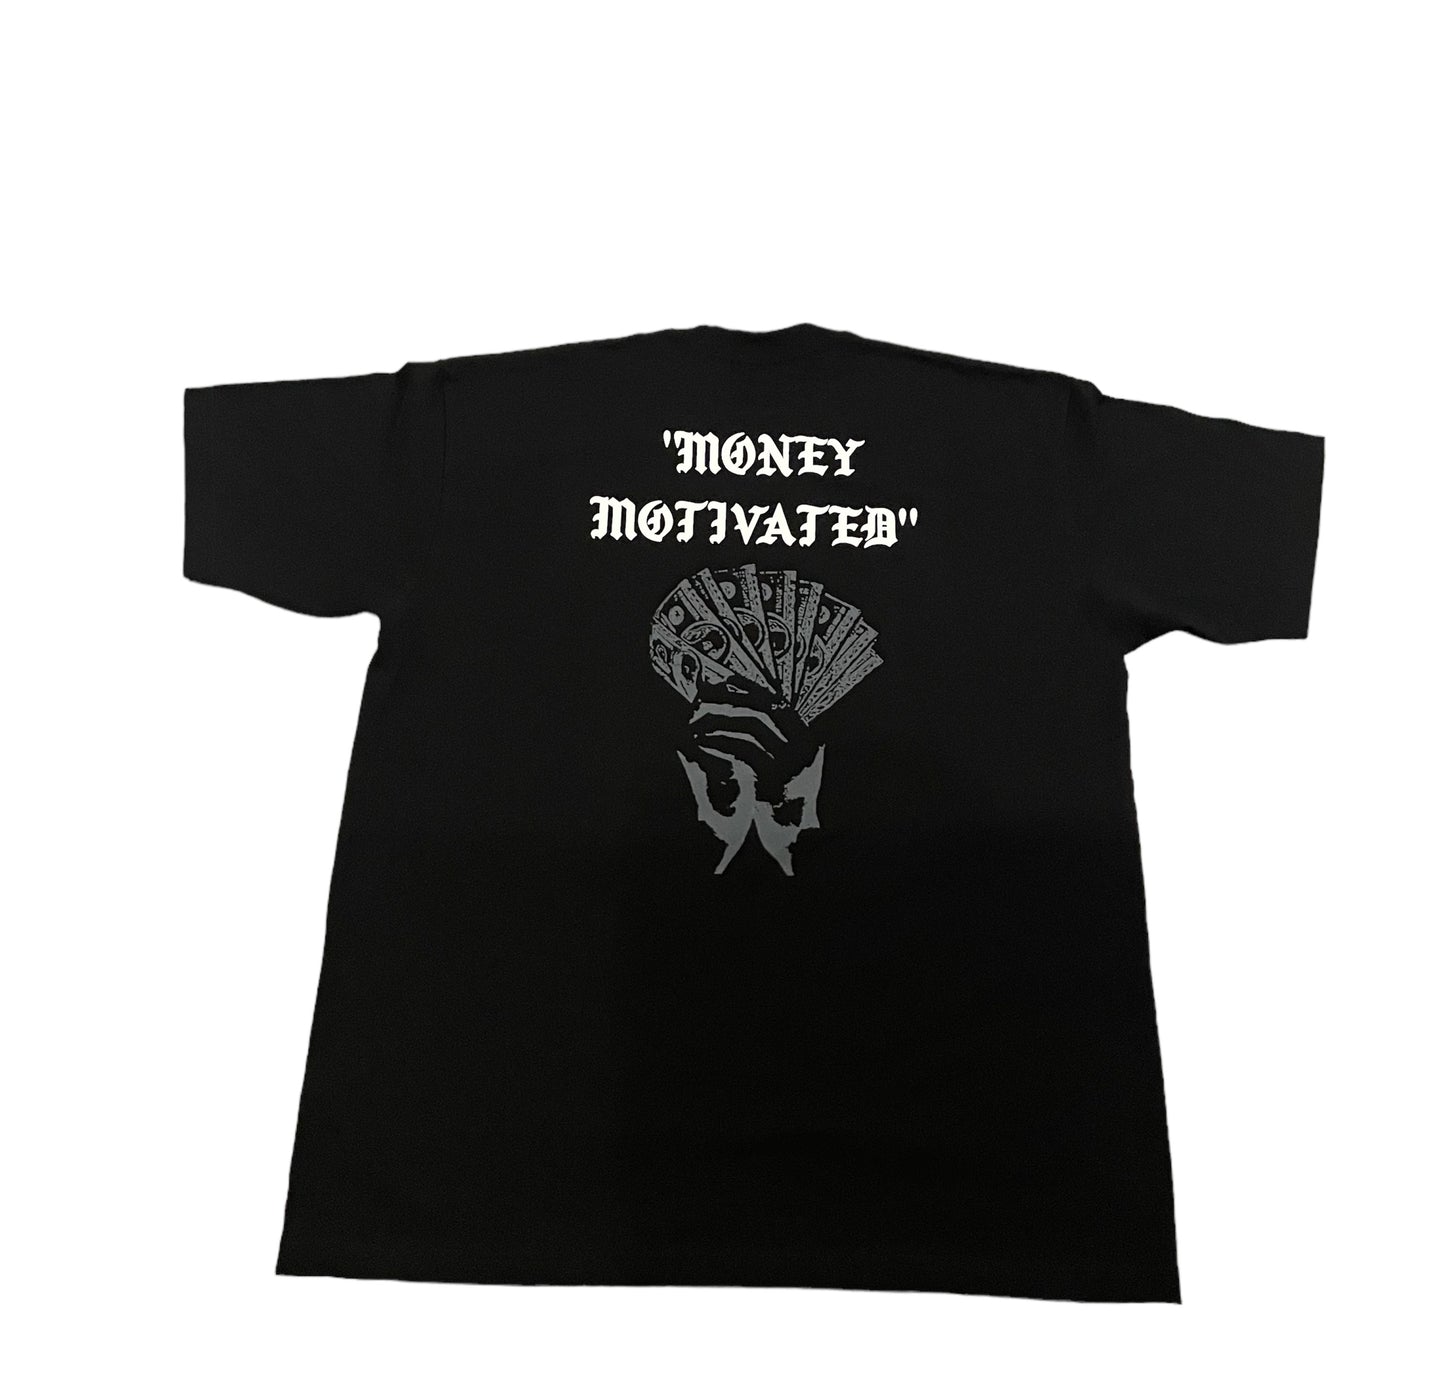 Dinero Dynasty “Money Motivated” shirt